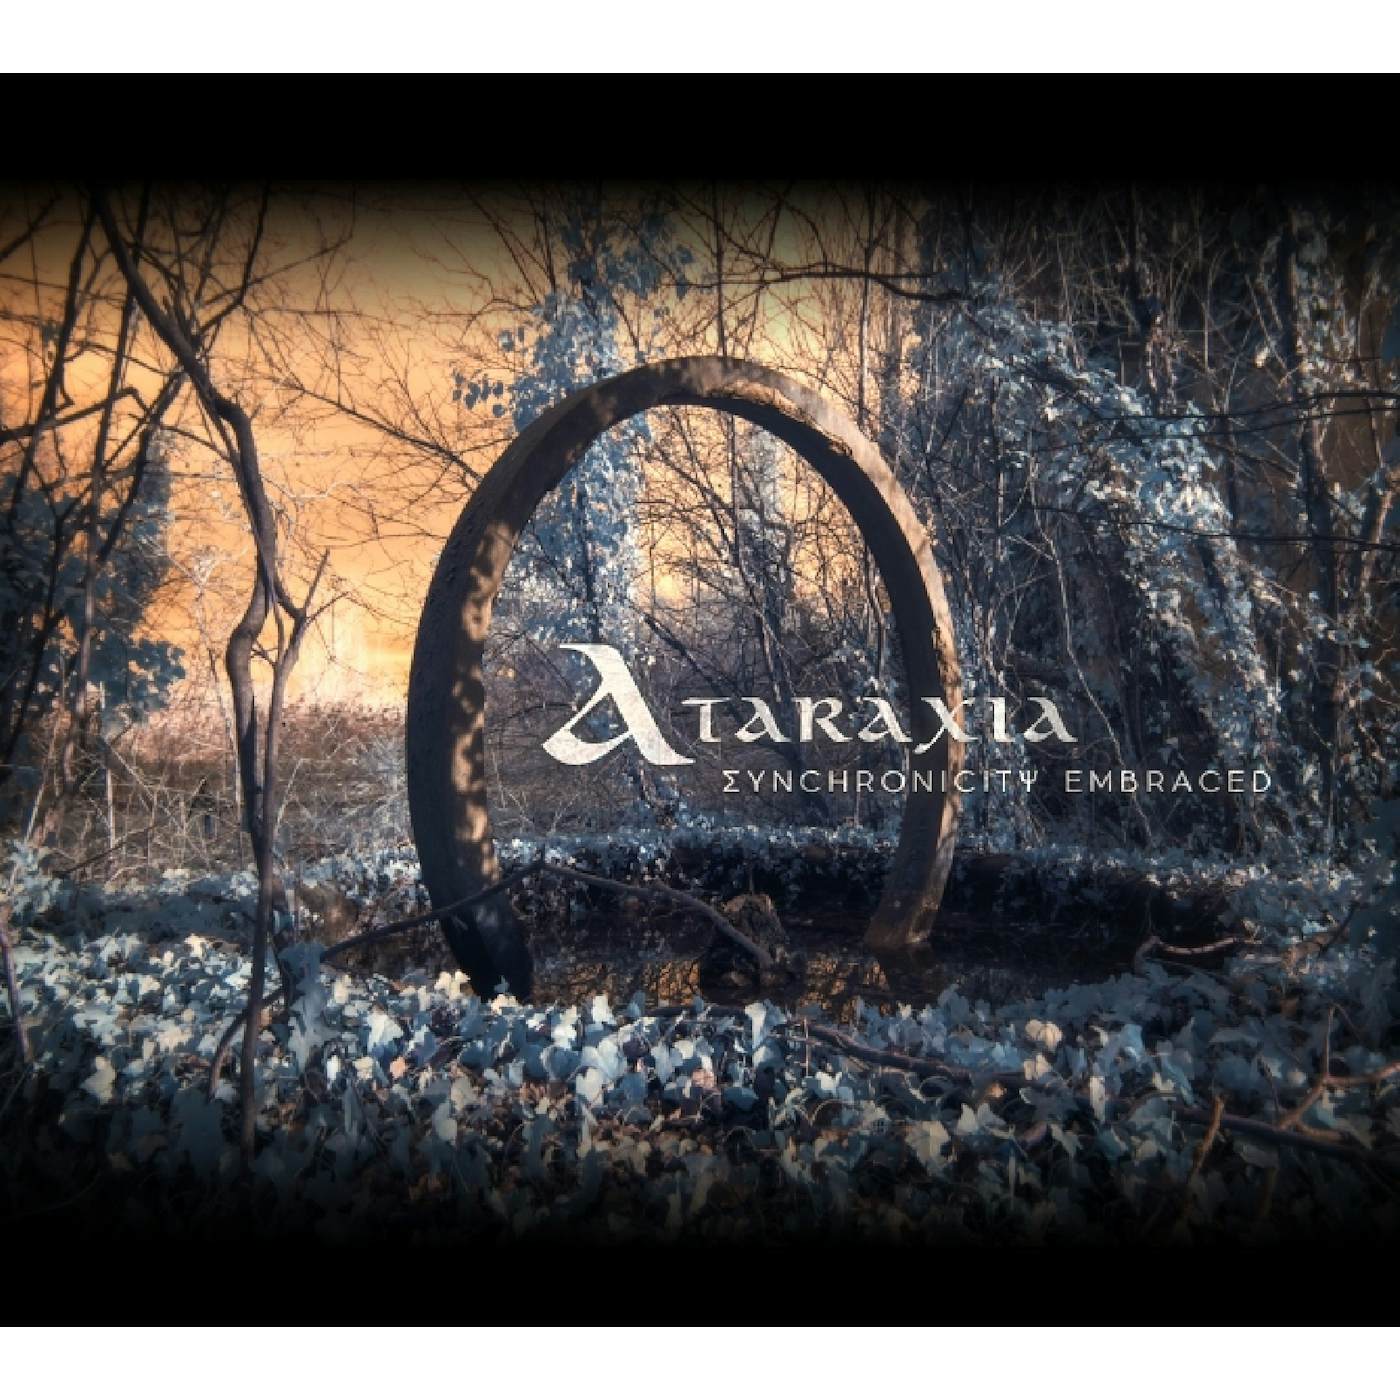 Ataraxia Synchronicity Embraced CD